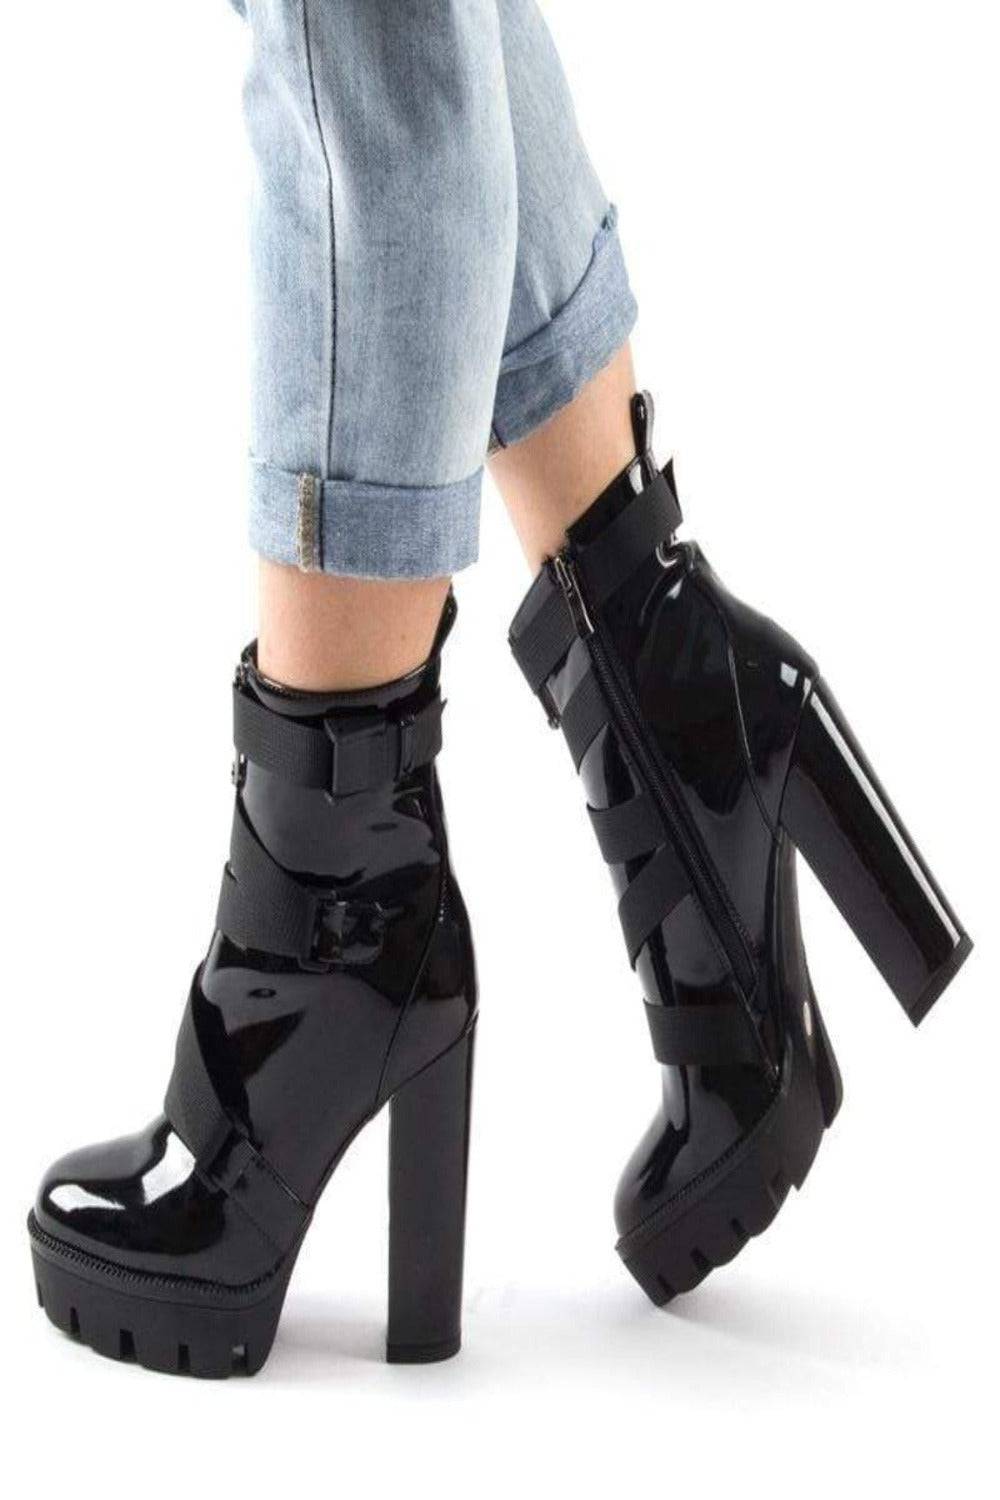 Goth High Heels Platform Ankle Boots - TGC Boutique - Black Boots